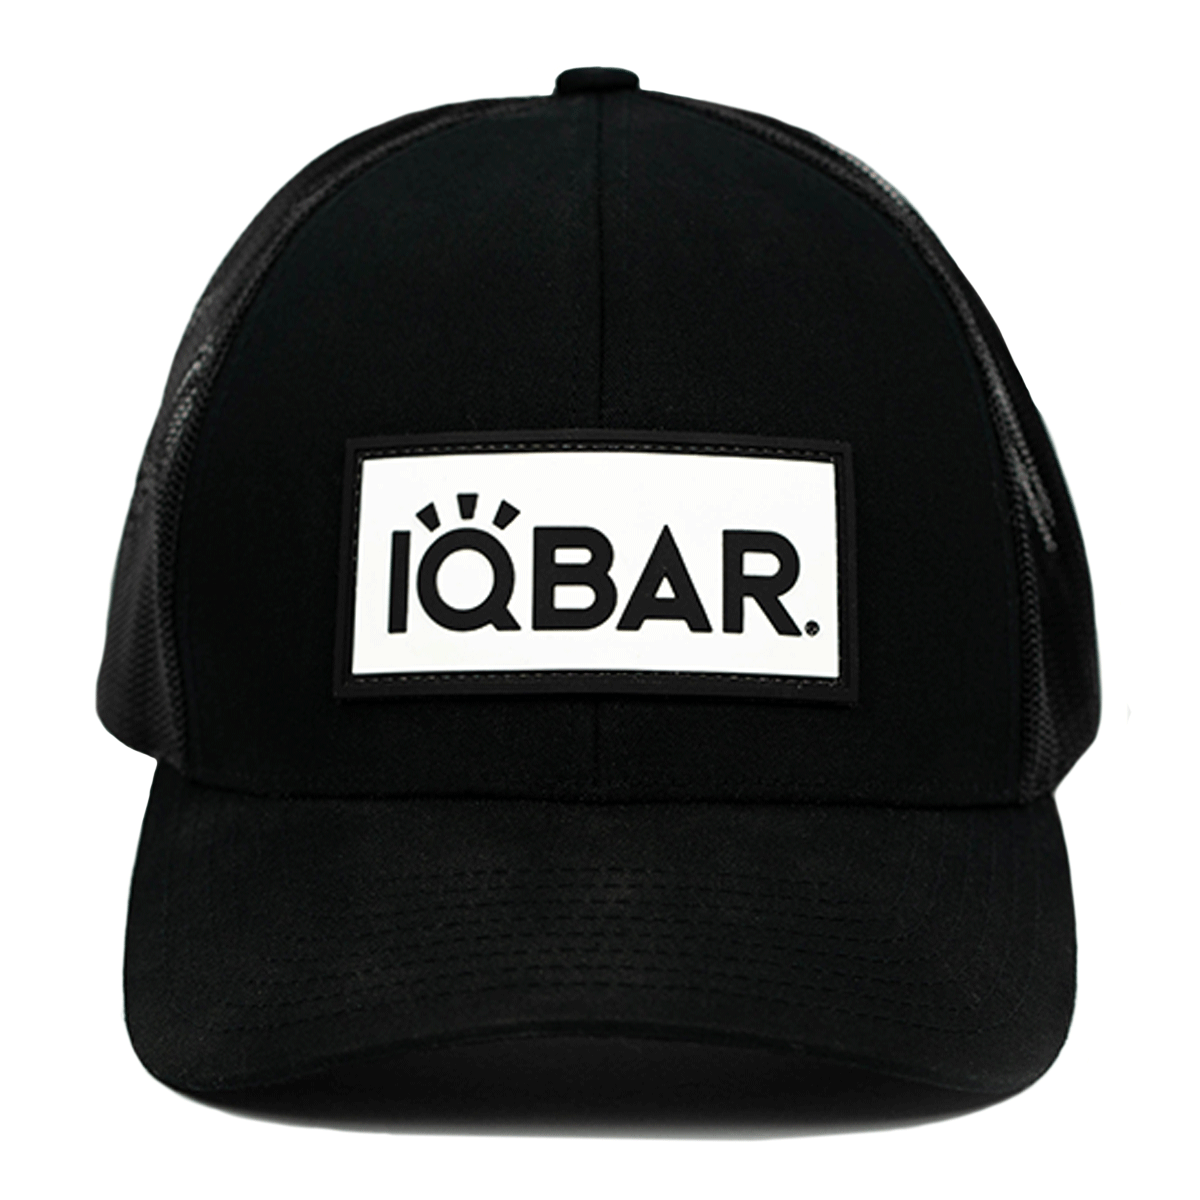 IQBAR Rubber Patch Trucker Hat